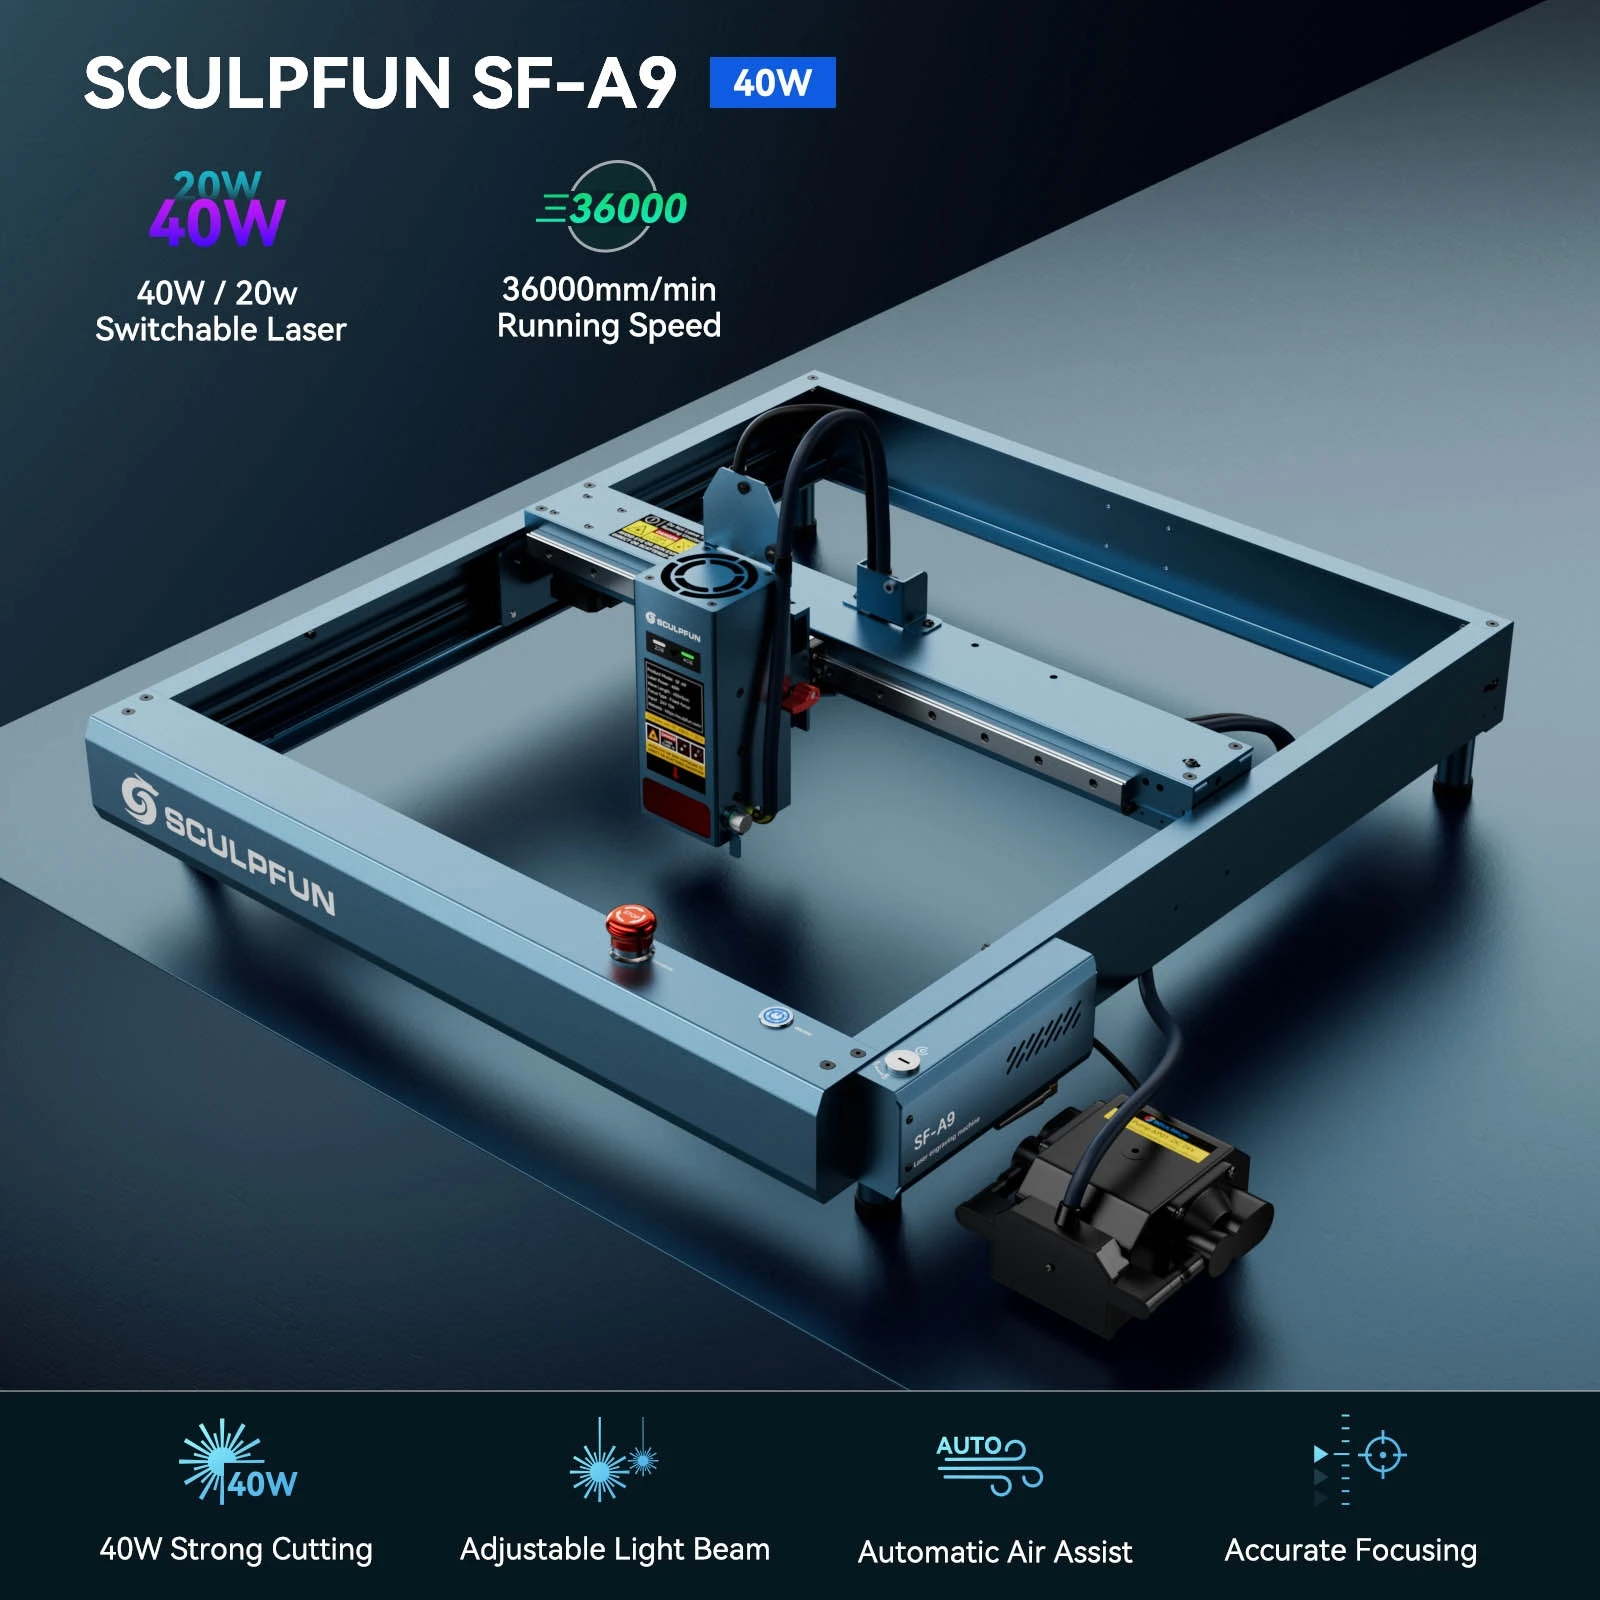 SCULPFUN SF-A9 Laser Engraver Cutter, 40W/20W Switchable Laser Power, Auto Air Assist, 36000mm/min Engraving Speed, Precise Focusing, WiFi/Bluetooth Connection, 400x400mm - EU Plug